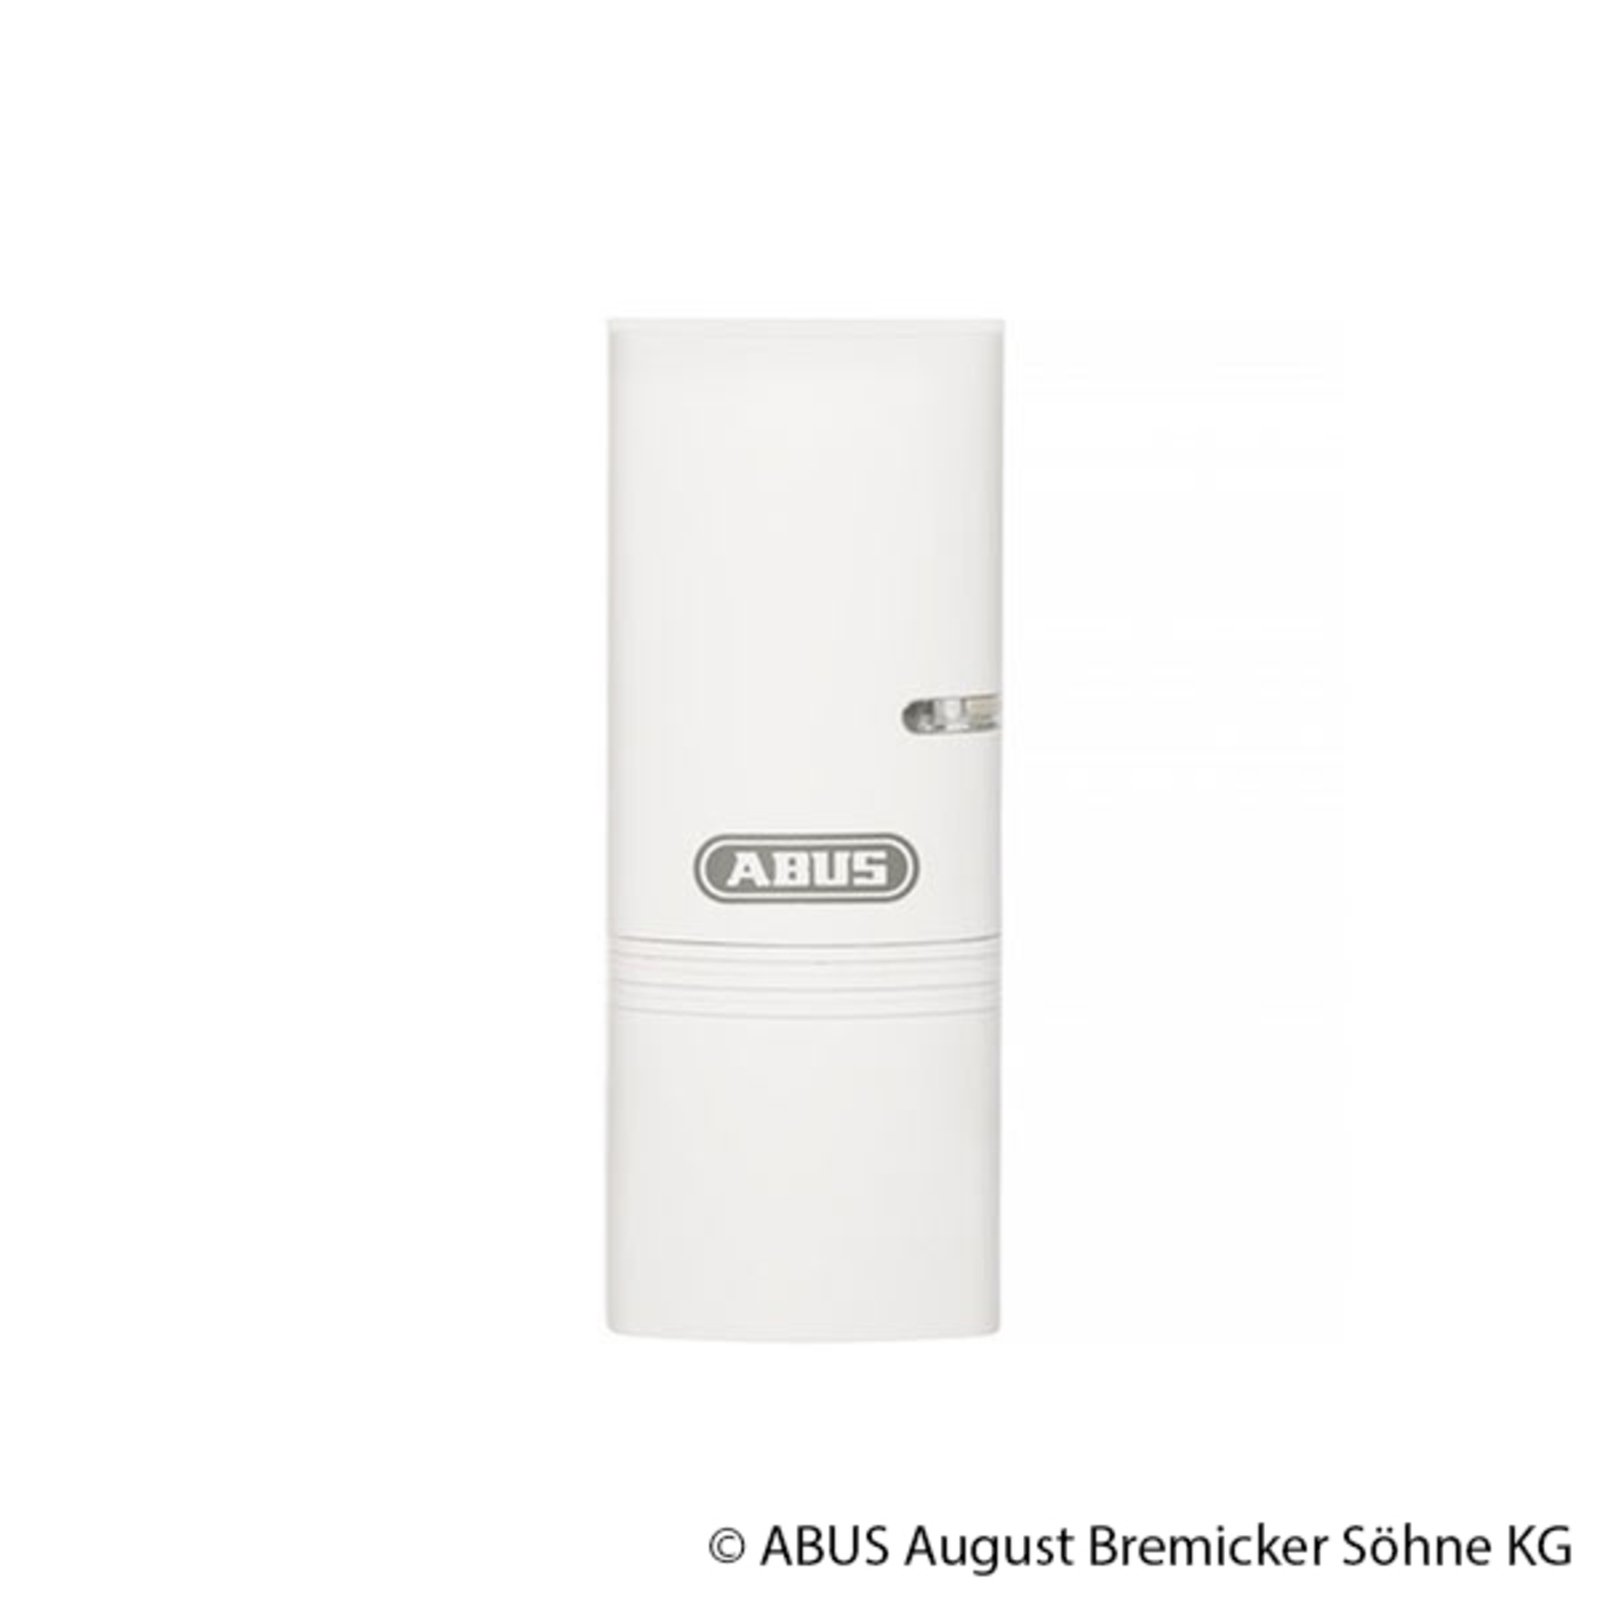 ABUS Smartvest wireless vibration detector